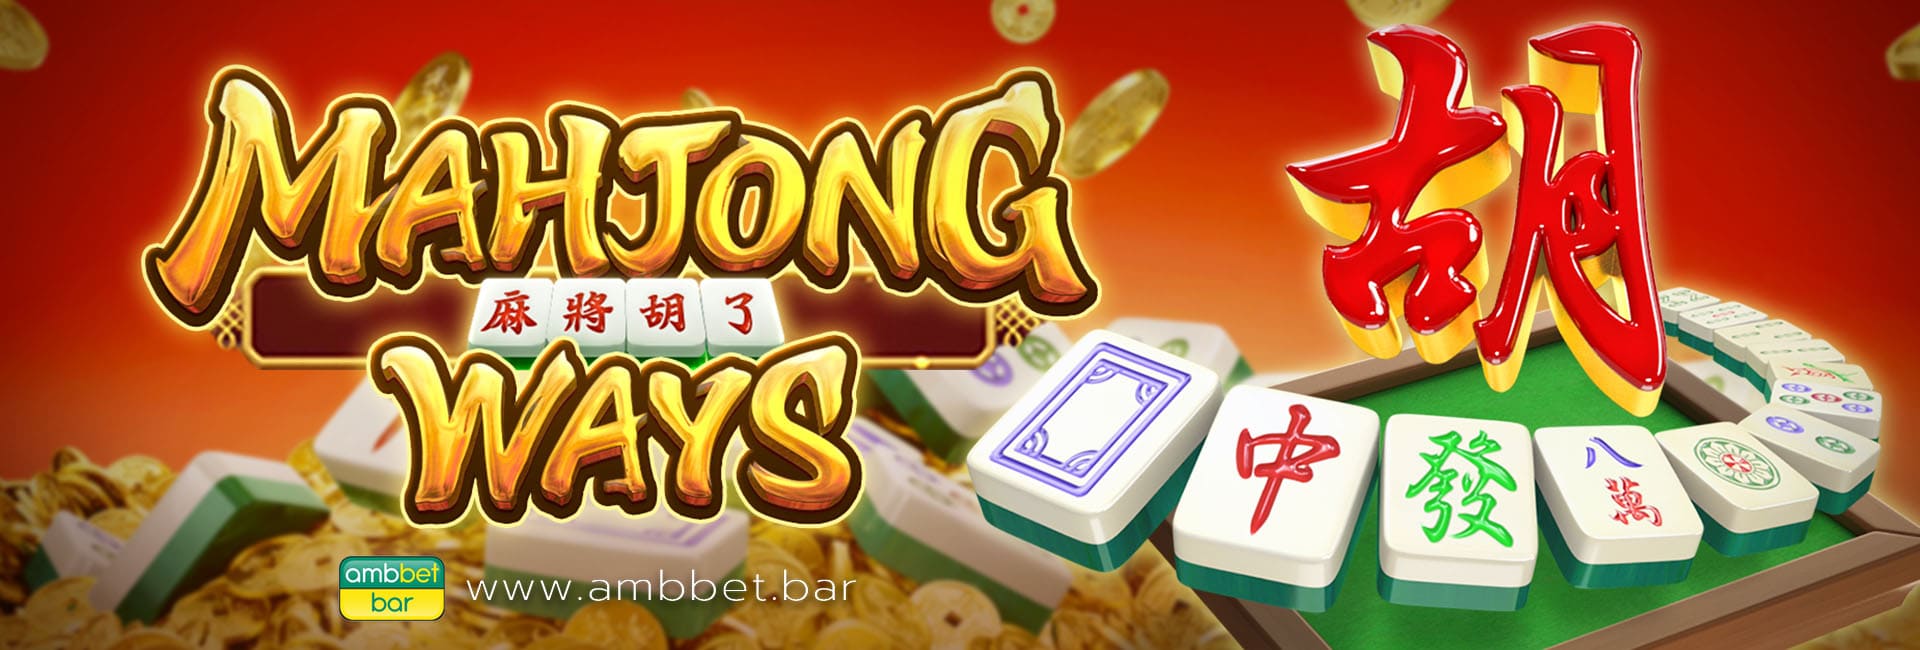 Mahjong Ways banner